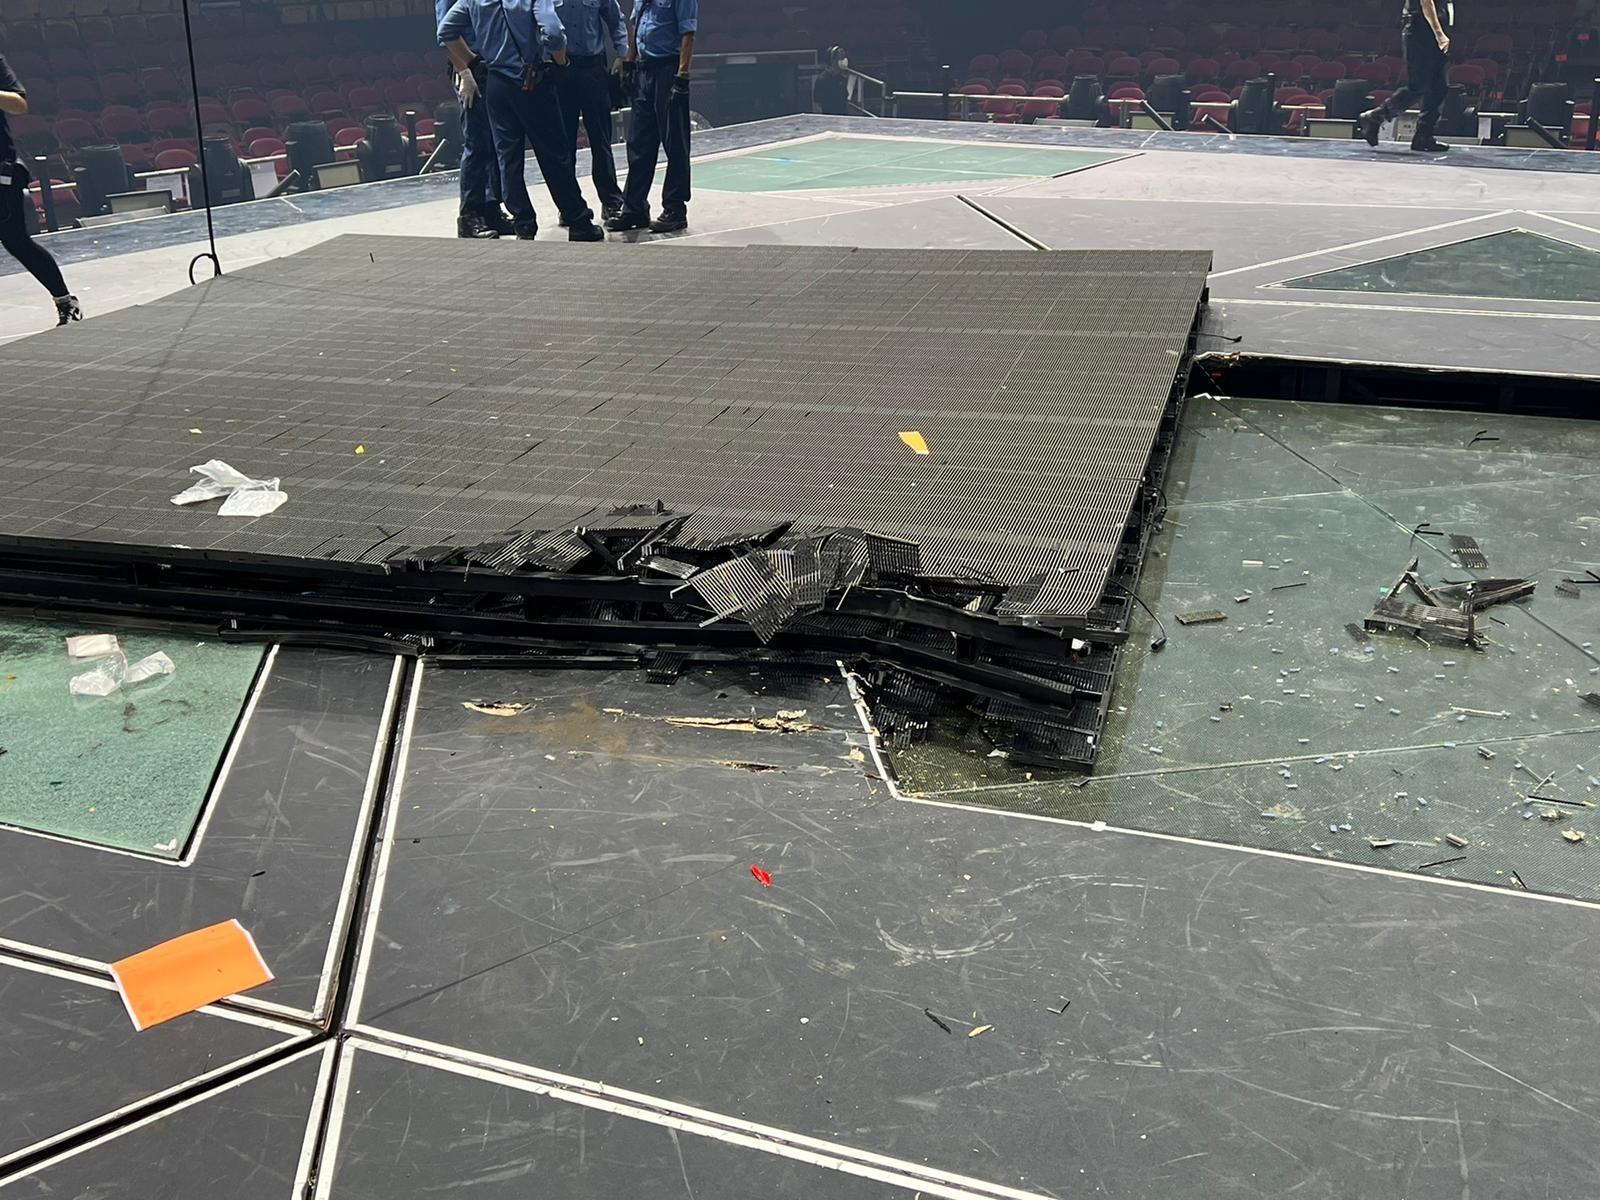 MIRROR的演唱会发生严重意外，台上大型屏幕突然坠下，砸中两名舞蹈员。